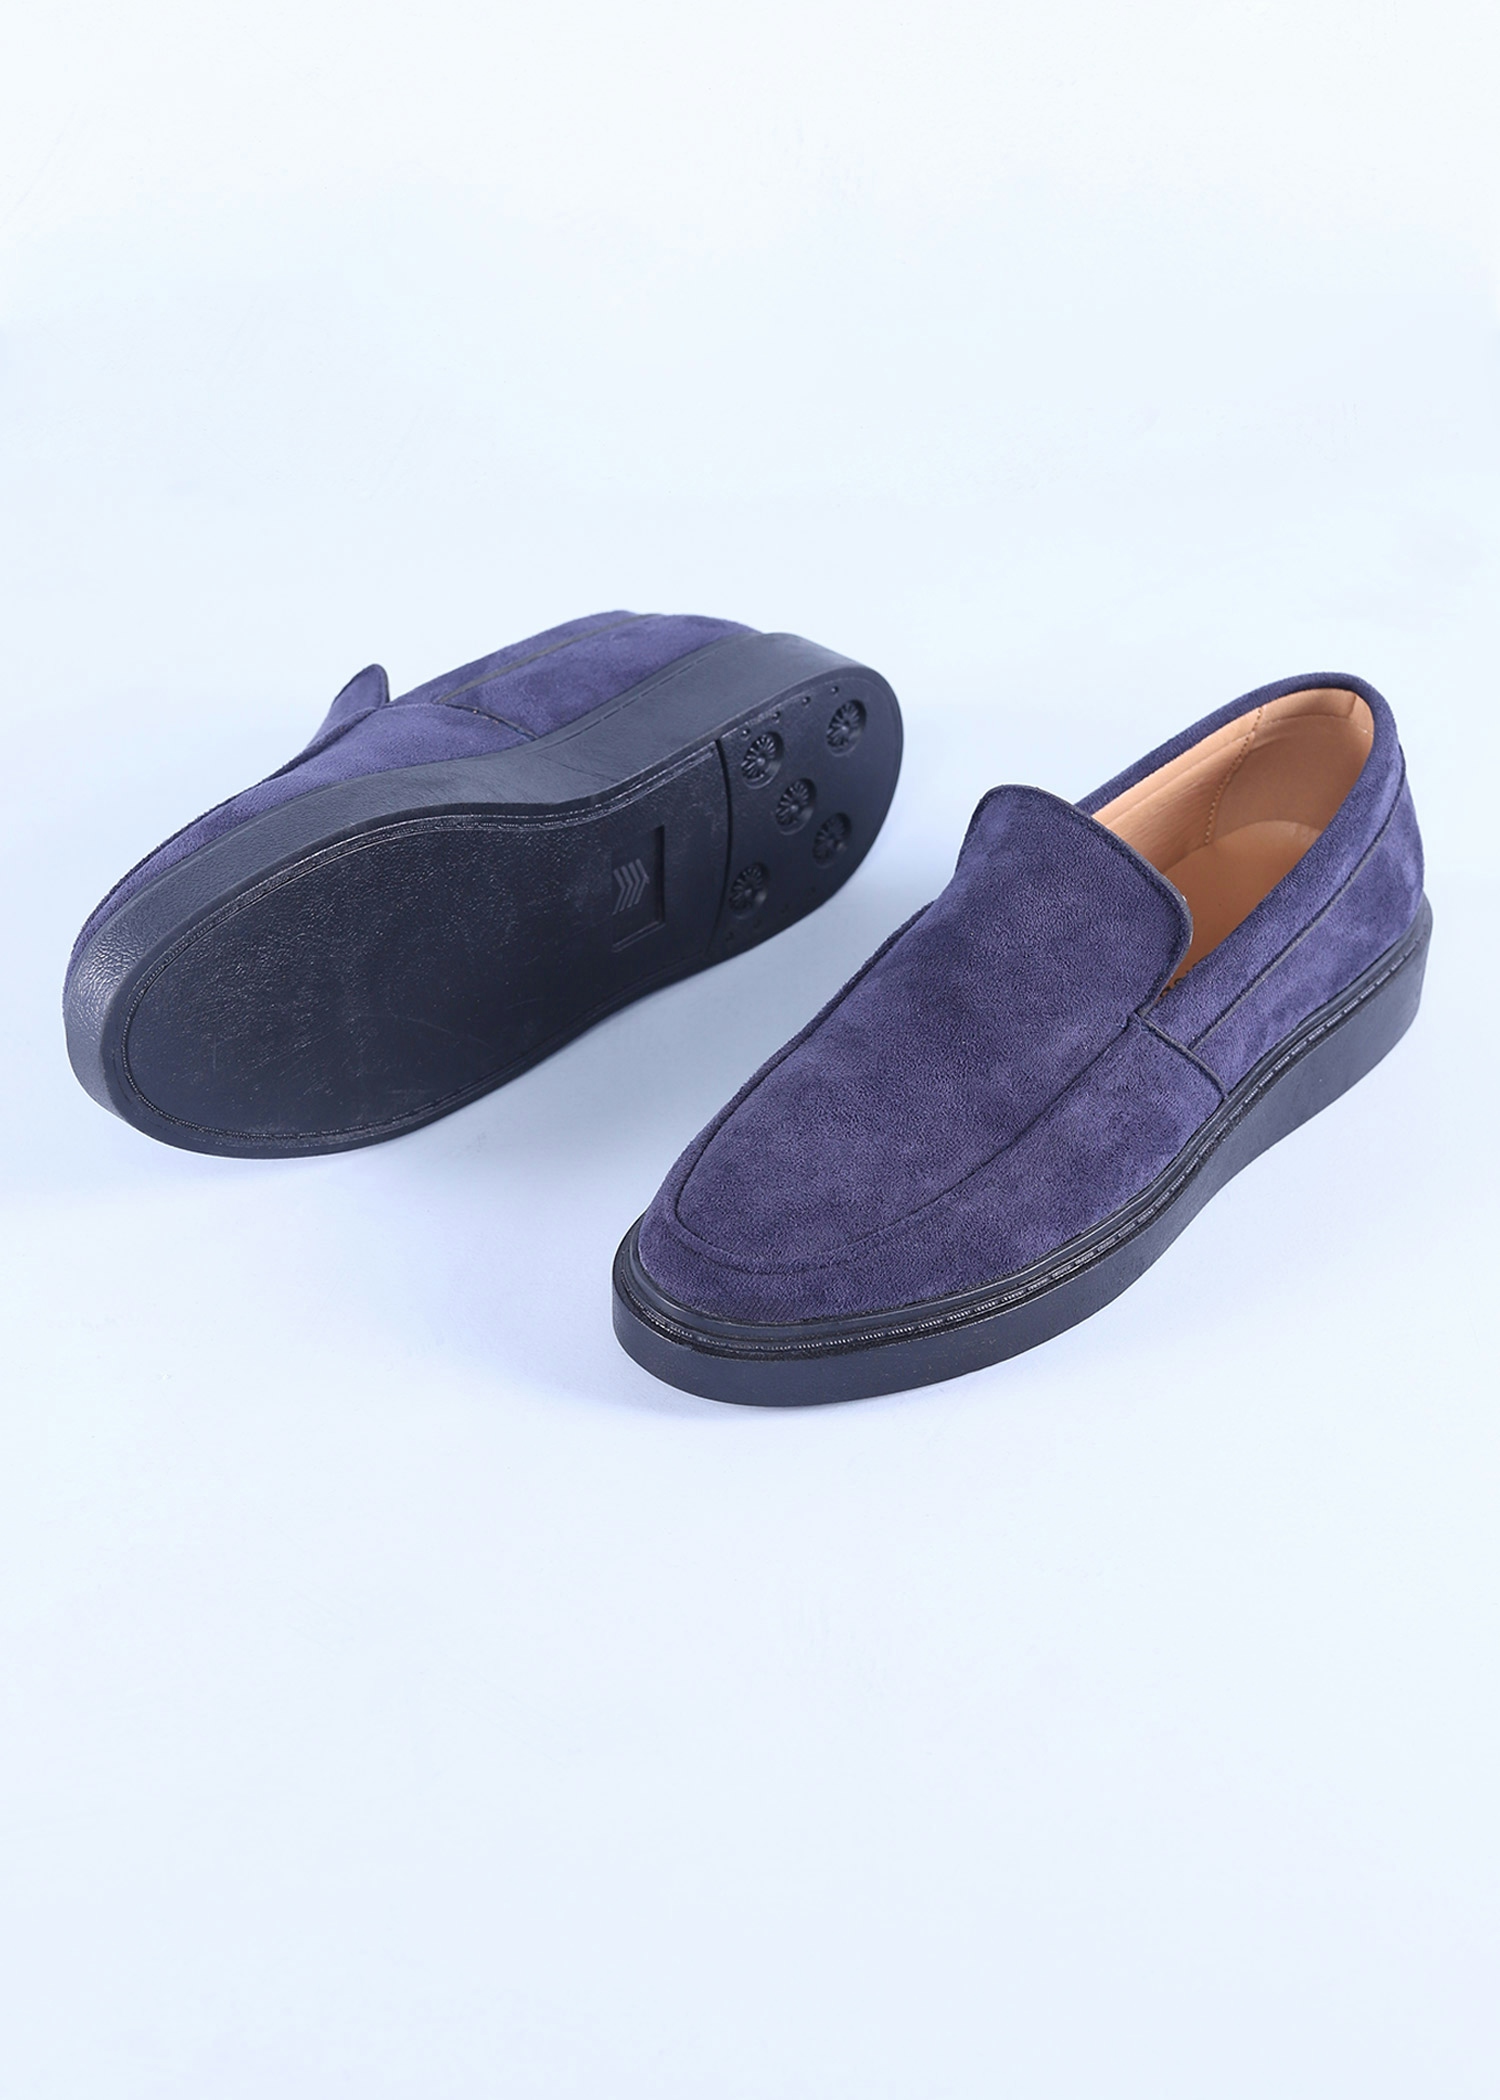 segura mens shoes navy color sole